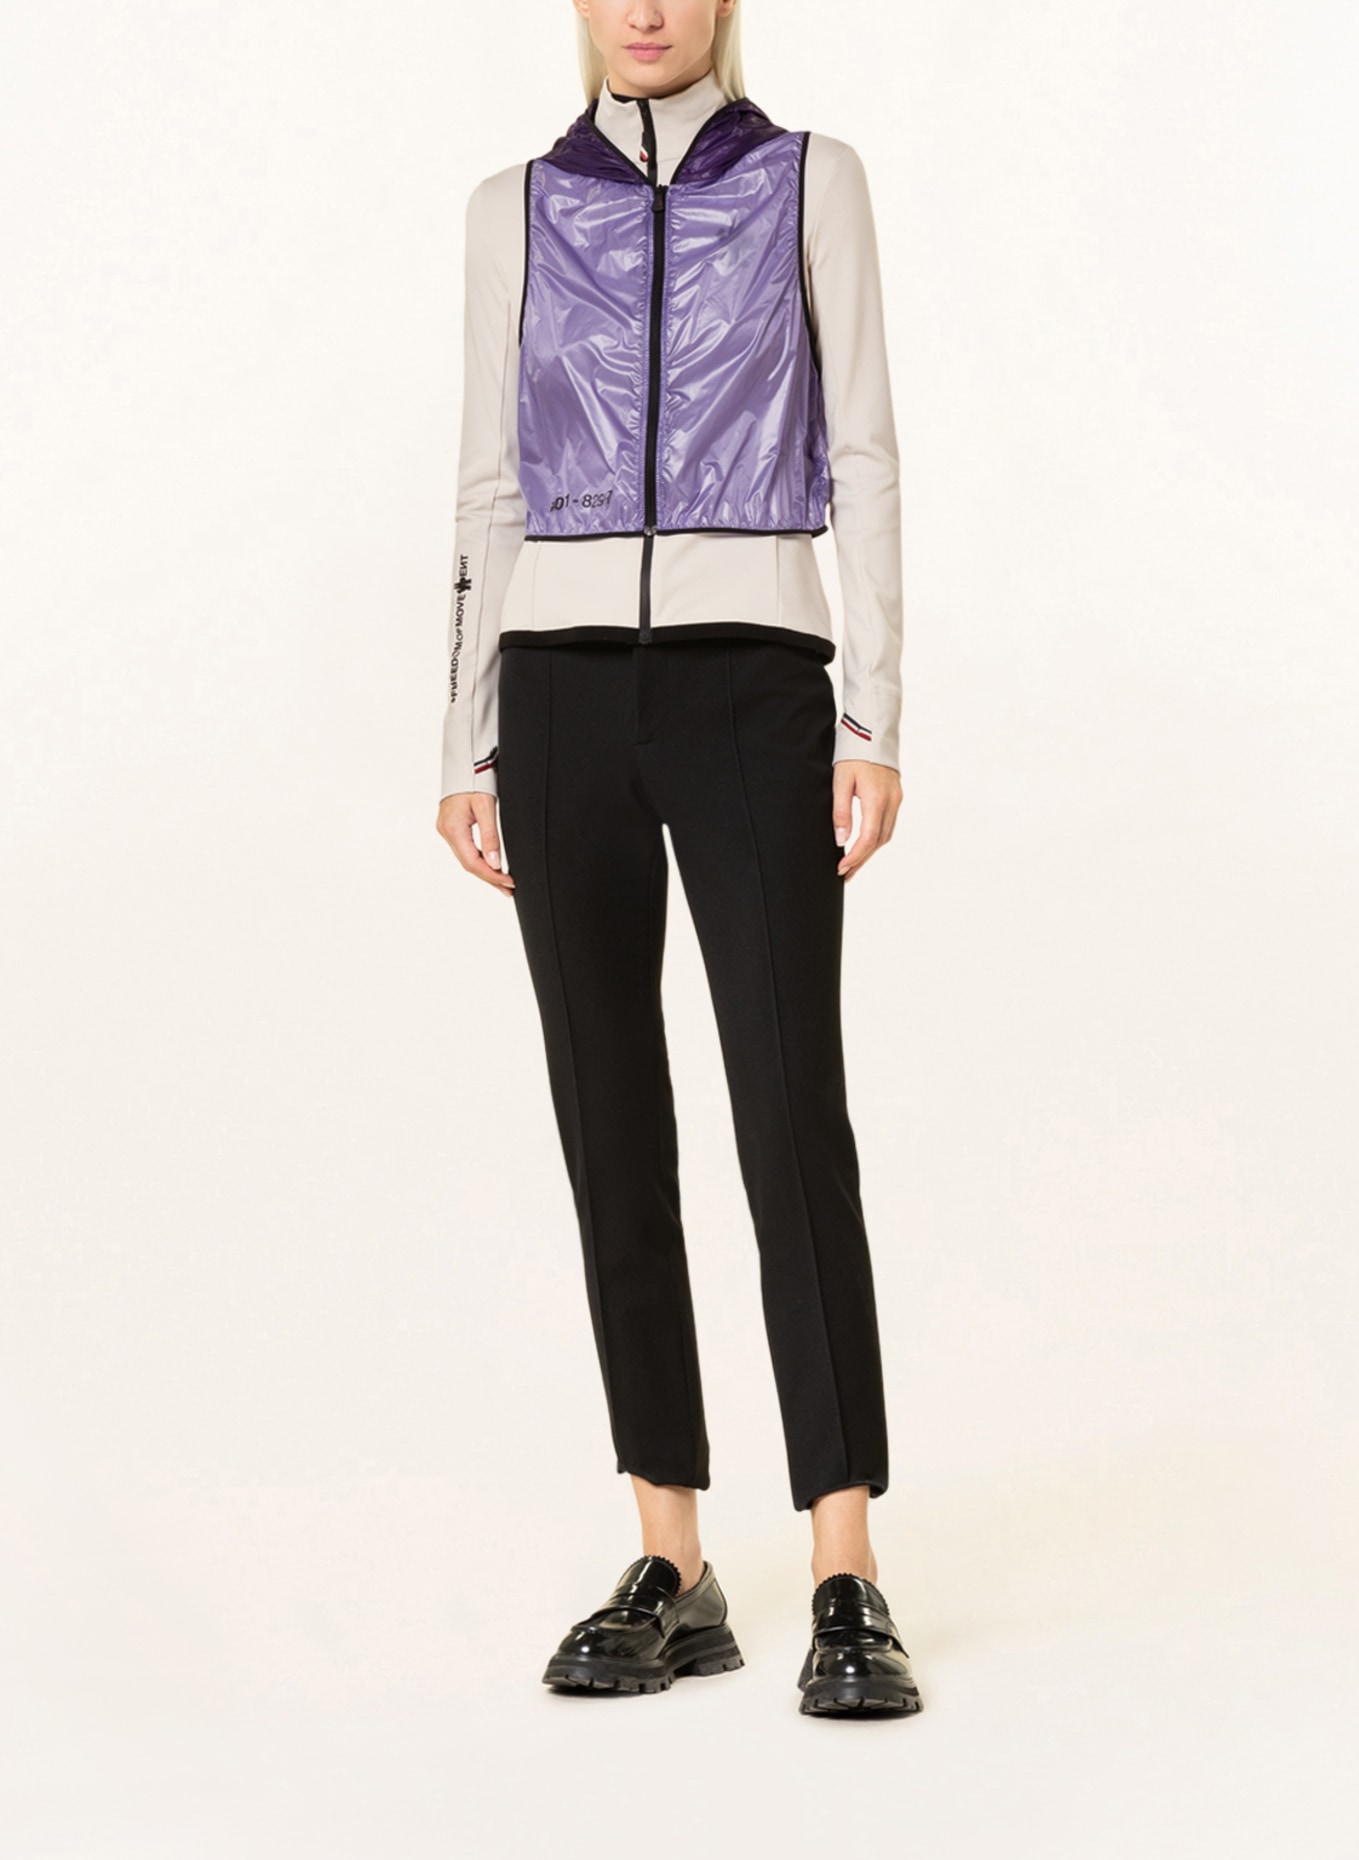 MONCLER GRENOBLE Jacke mit abnehmbarer Weste, Farbe: CREME/ LILA (Bild 2)